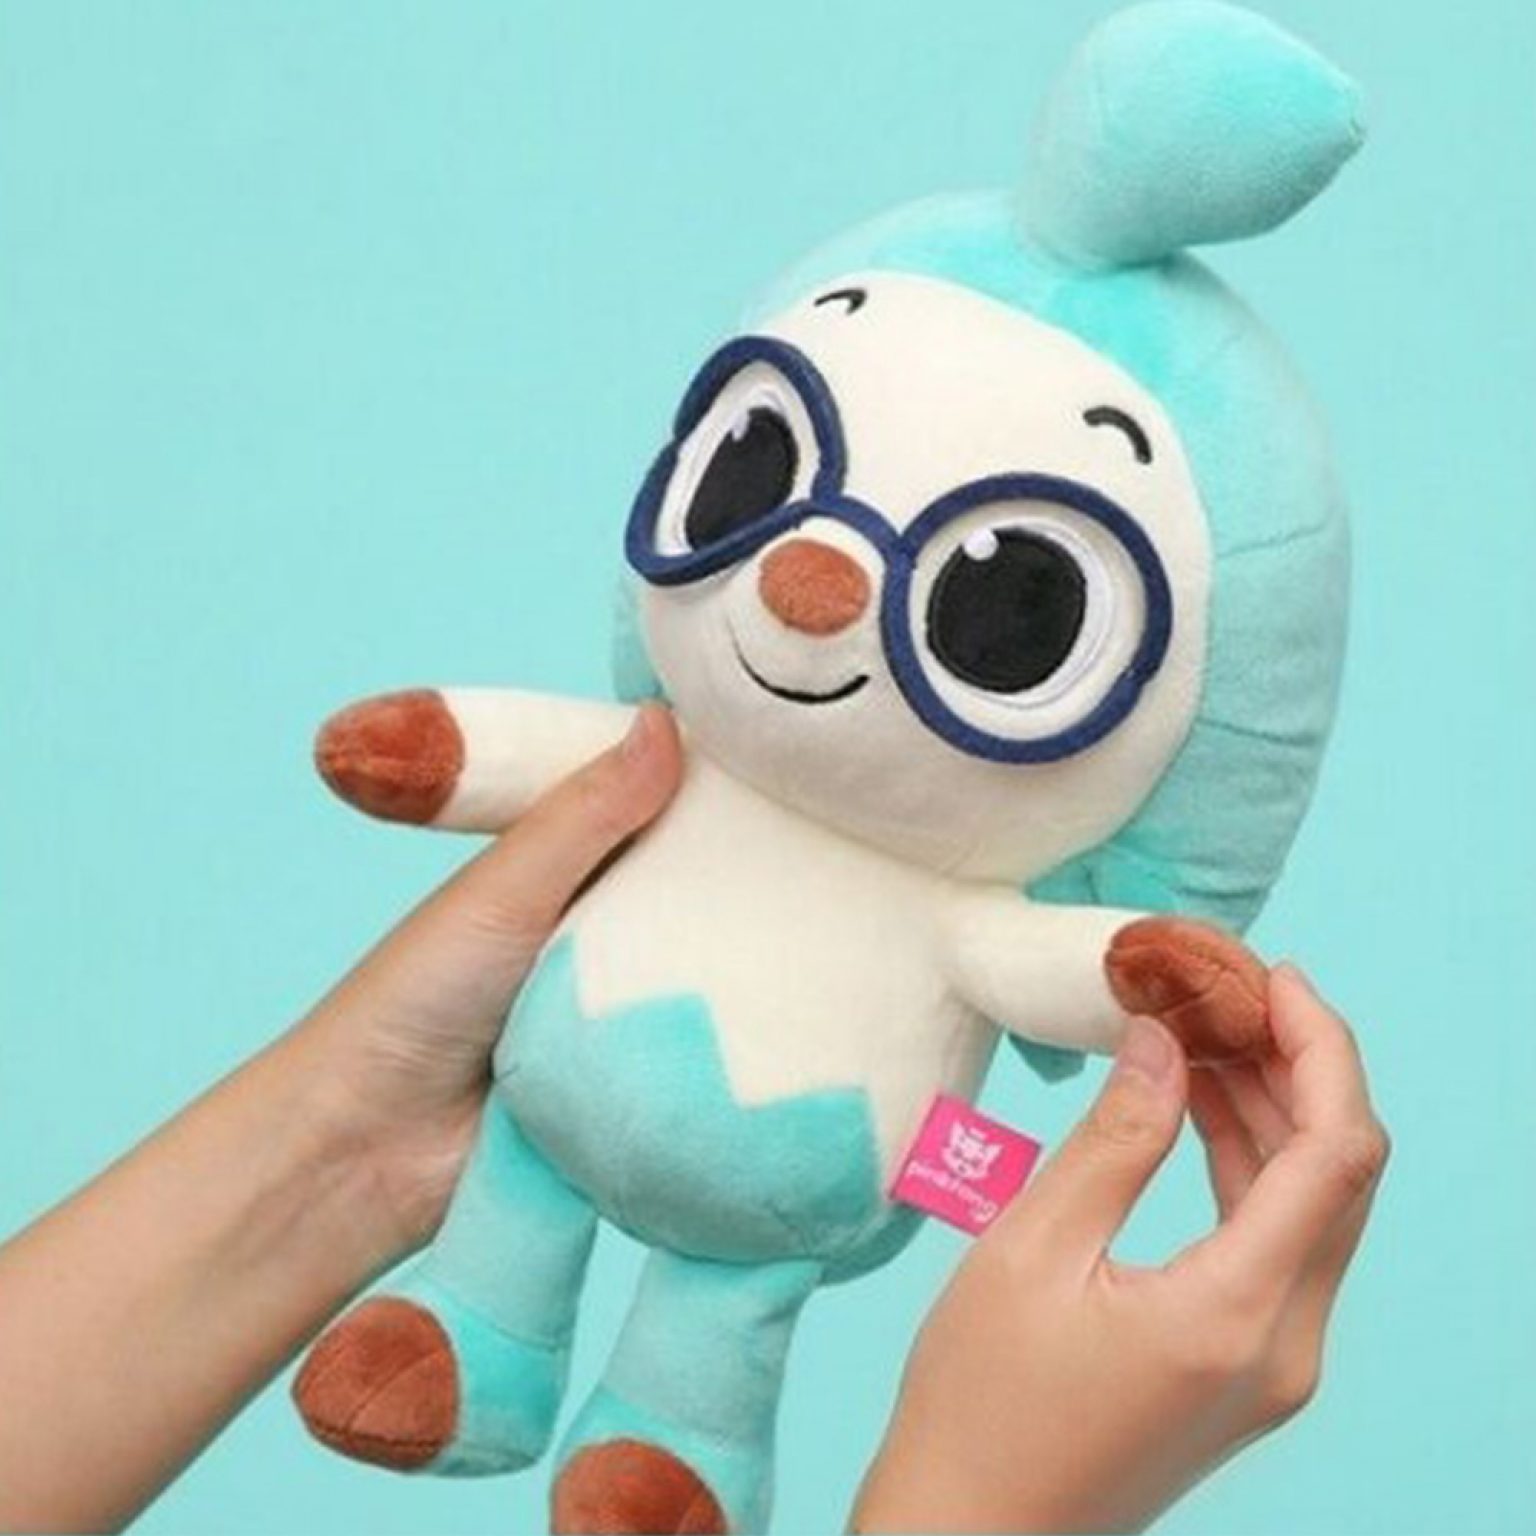 Pinkfong Wonderstar Plush Doll HOGI 30cm TV Character Toys Hobbies ...
